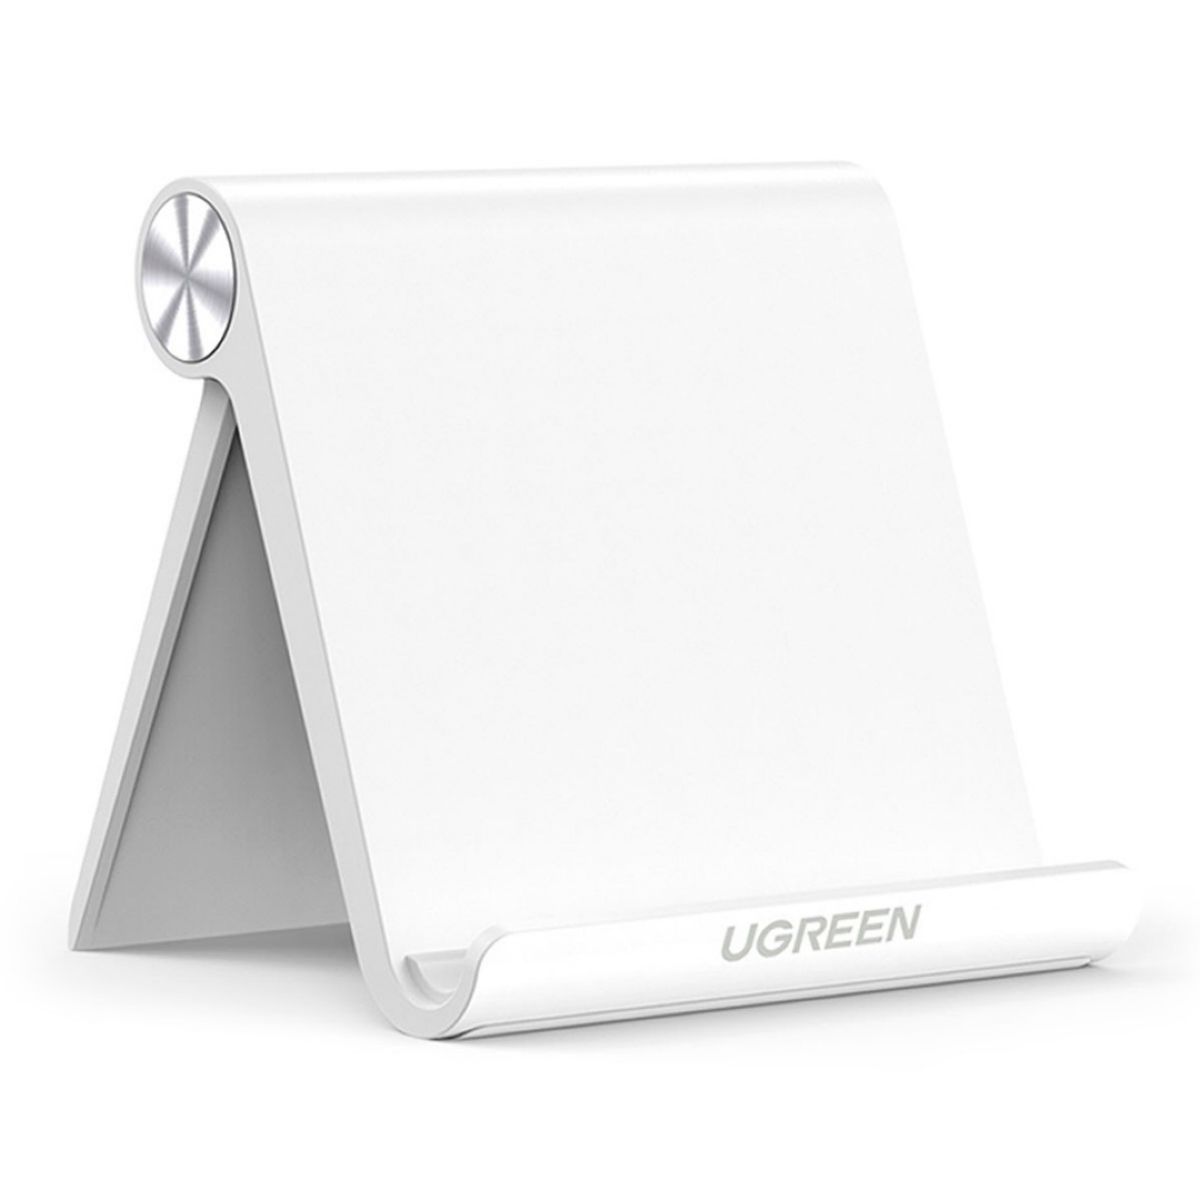 Soporte Ugreen Tablet/tableta/celular Ugreen S